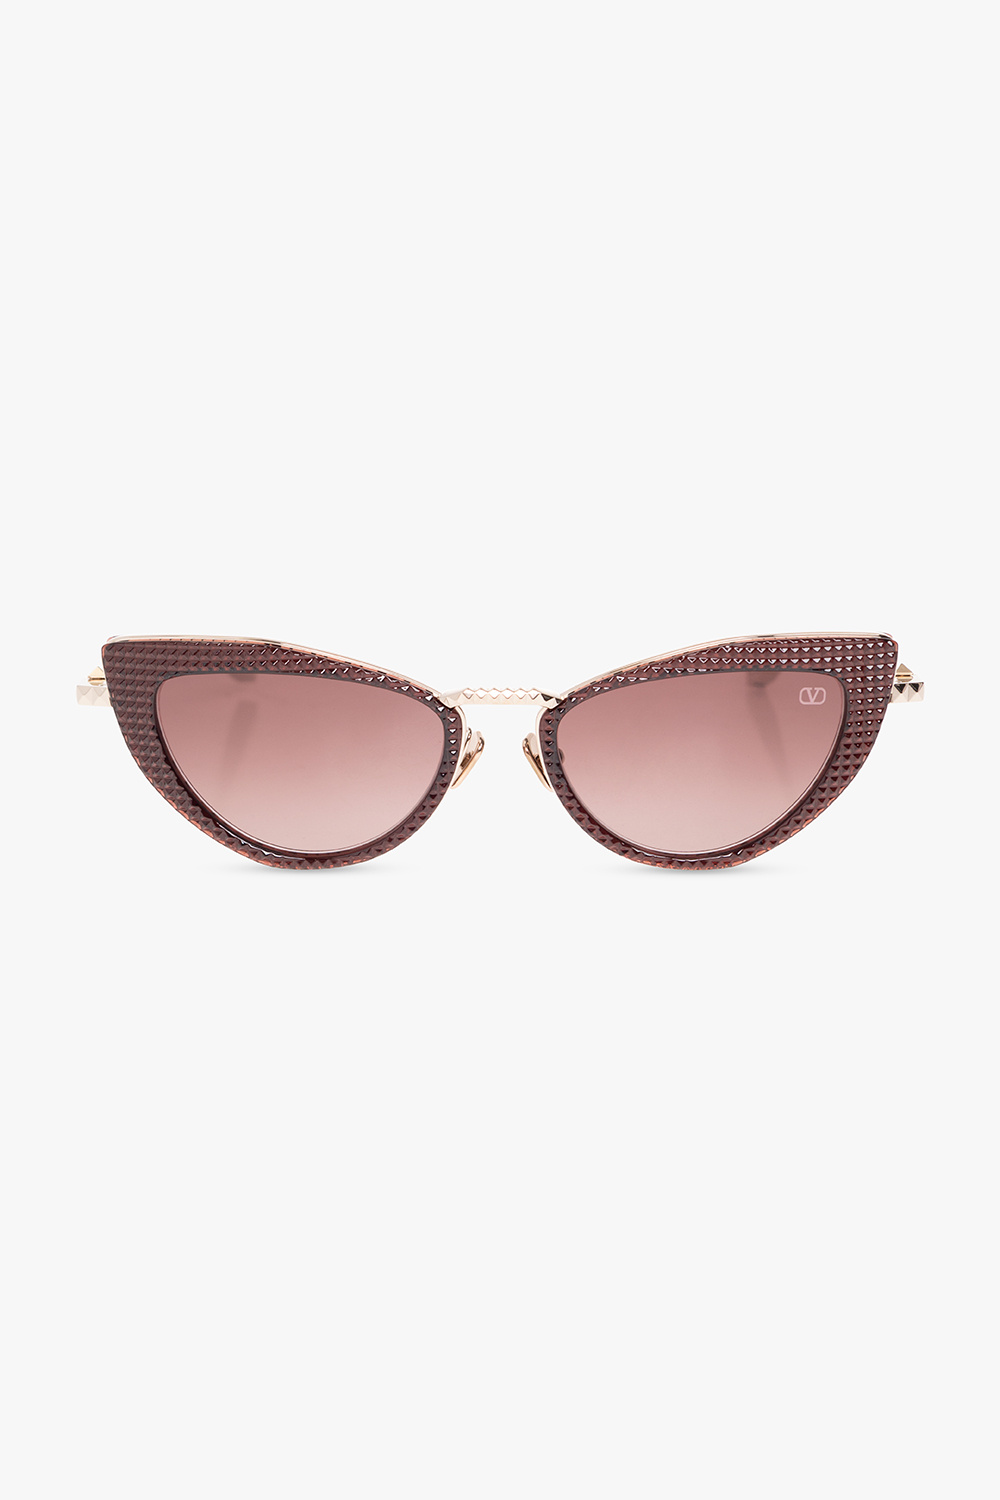 Valentino Eyewear jigsaw cat eye sunglasses